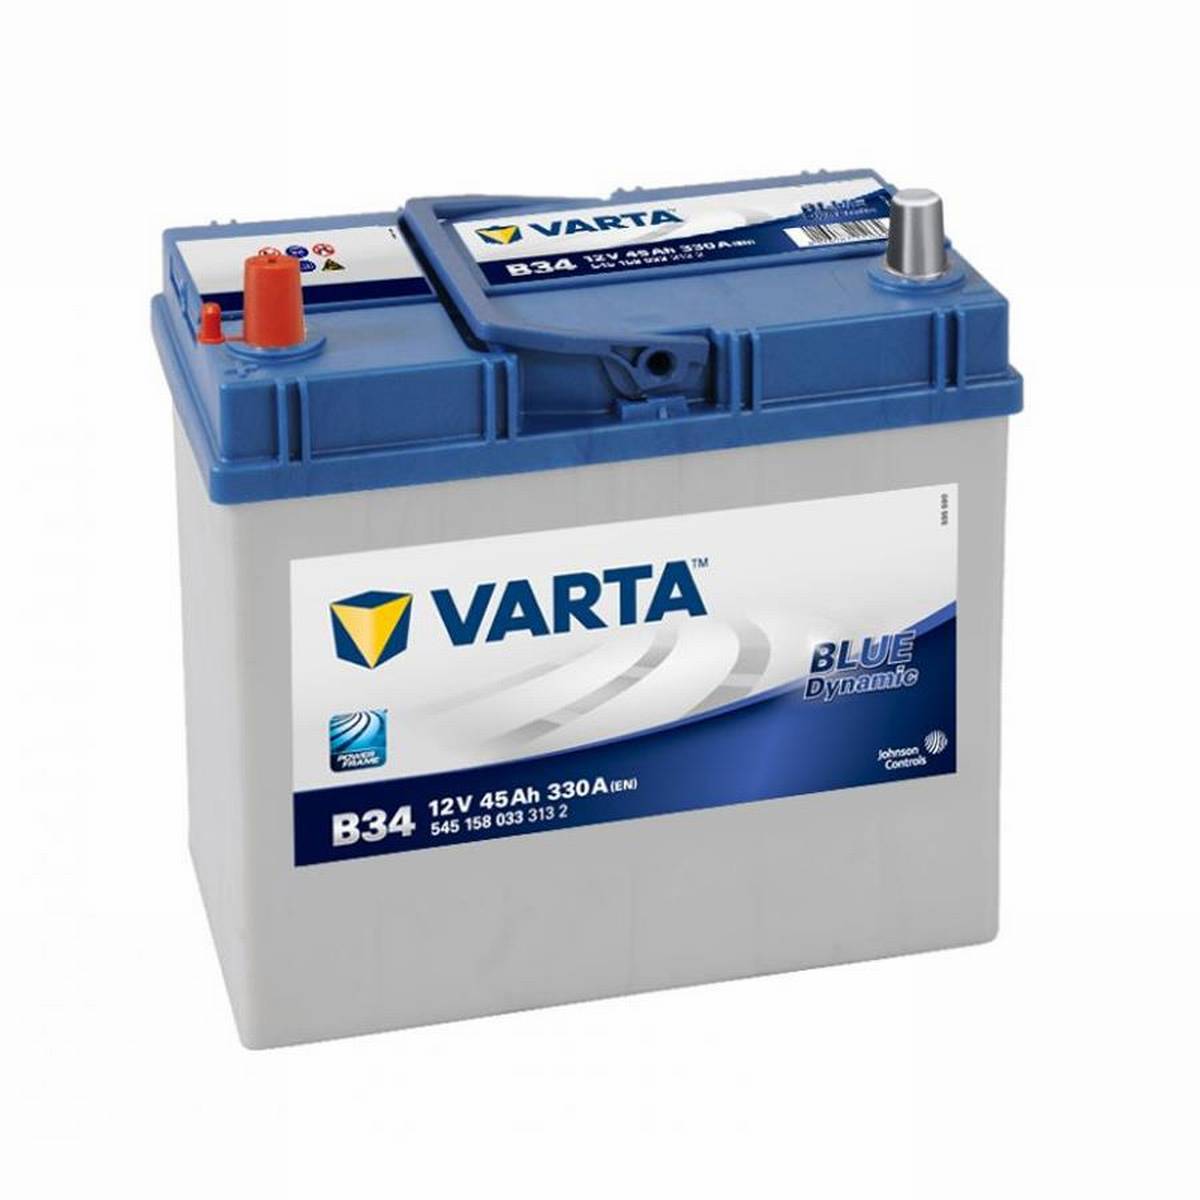 VARTA B34 Blue Dynamic 12V 45Ah 330A Autobatterie 545 158 033